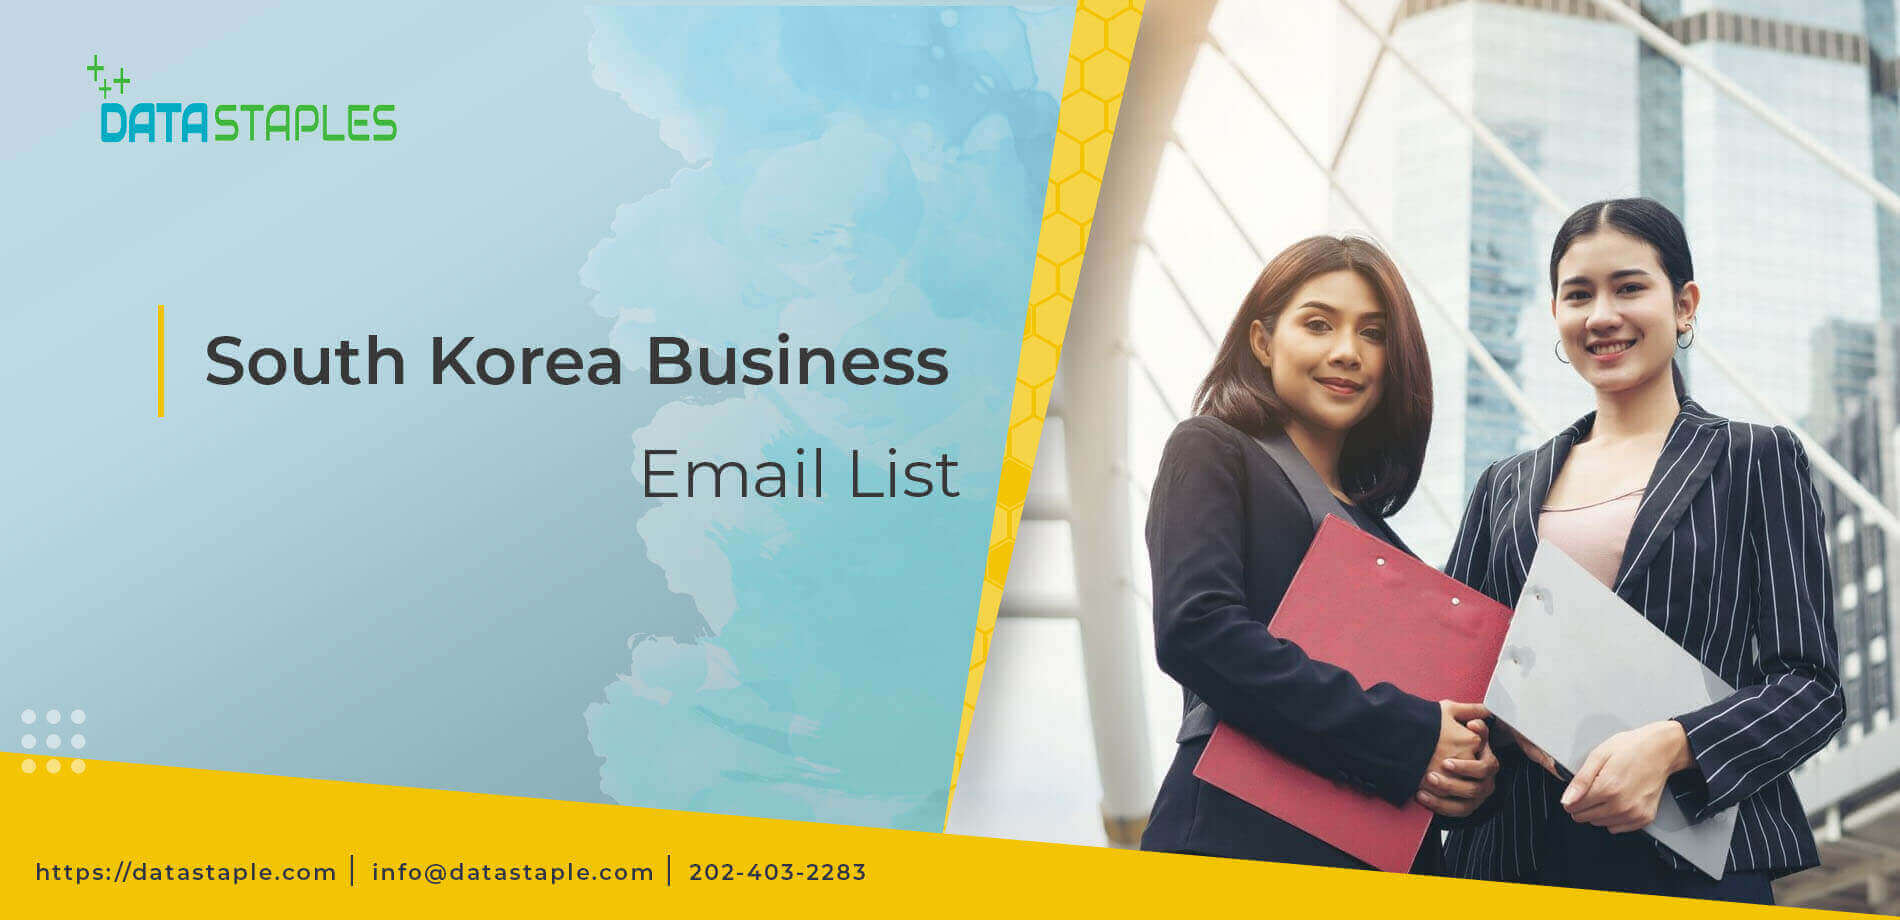 South Korea Business Email List | DataStaples